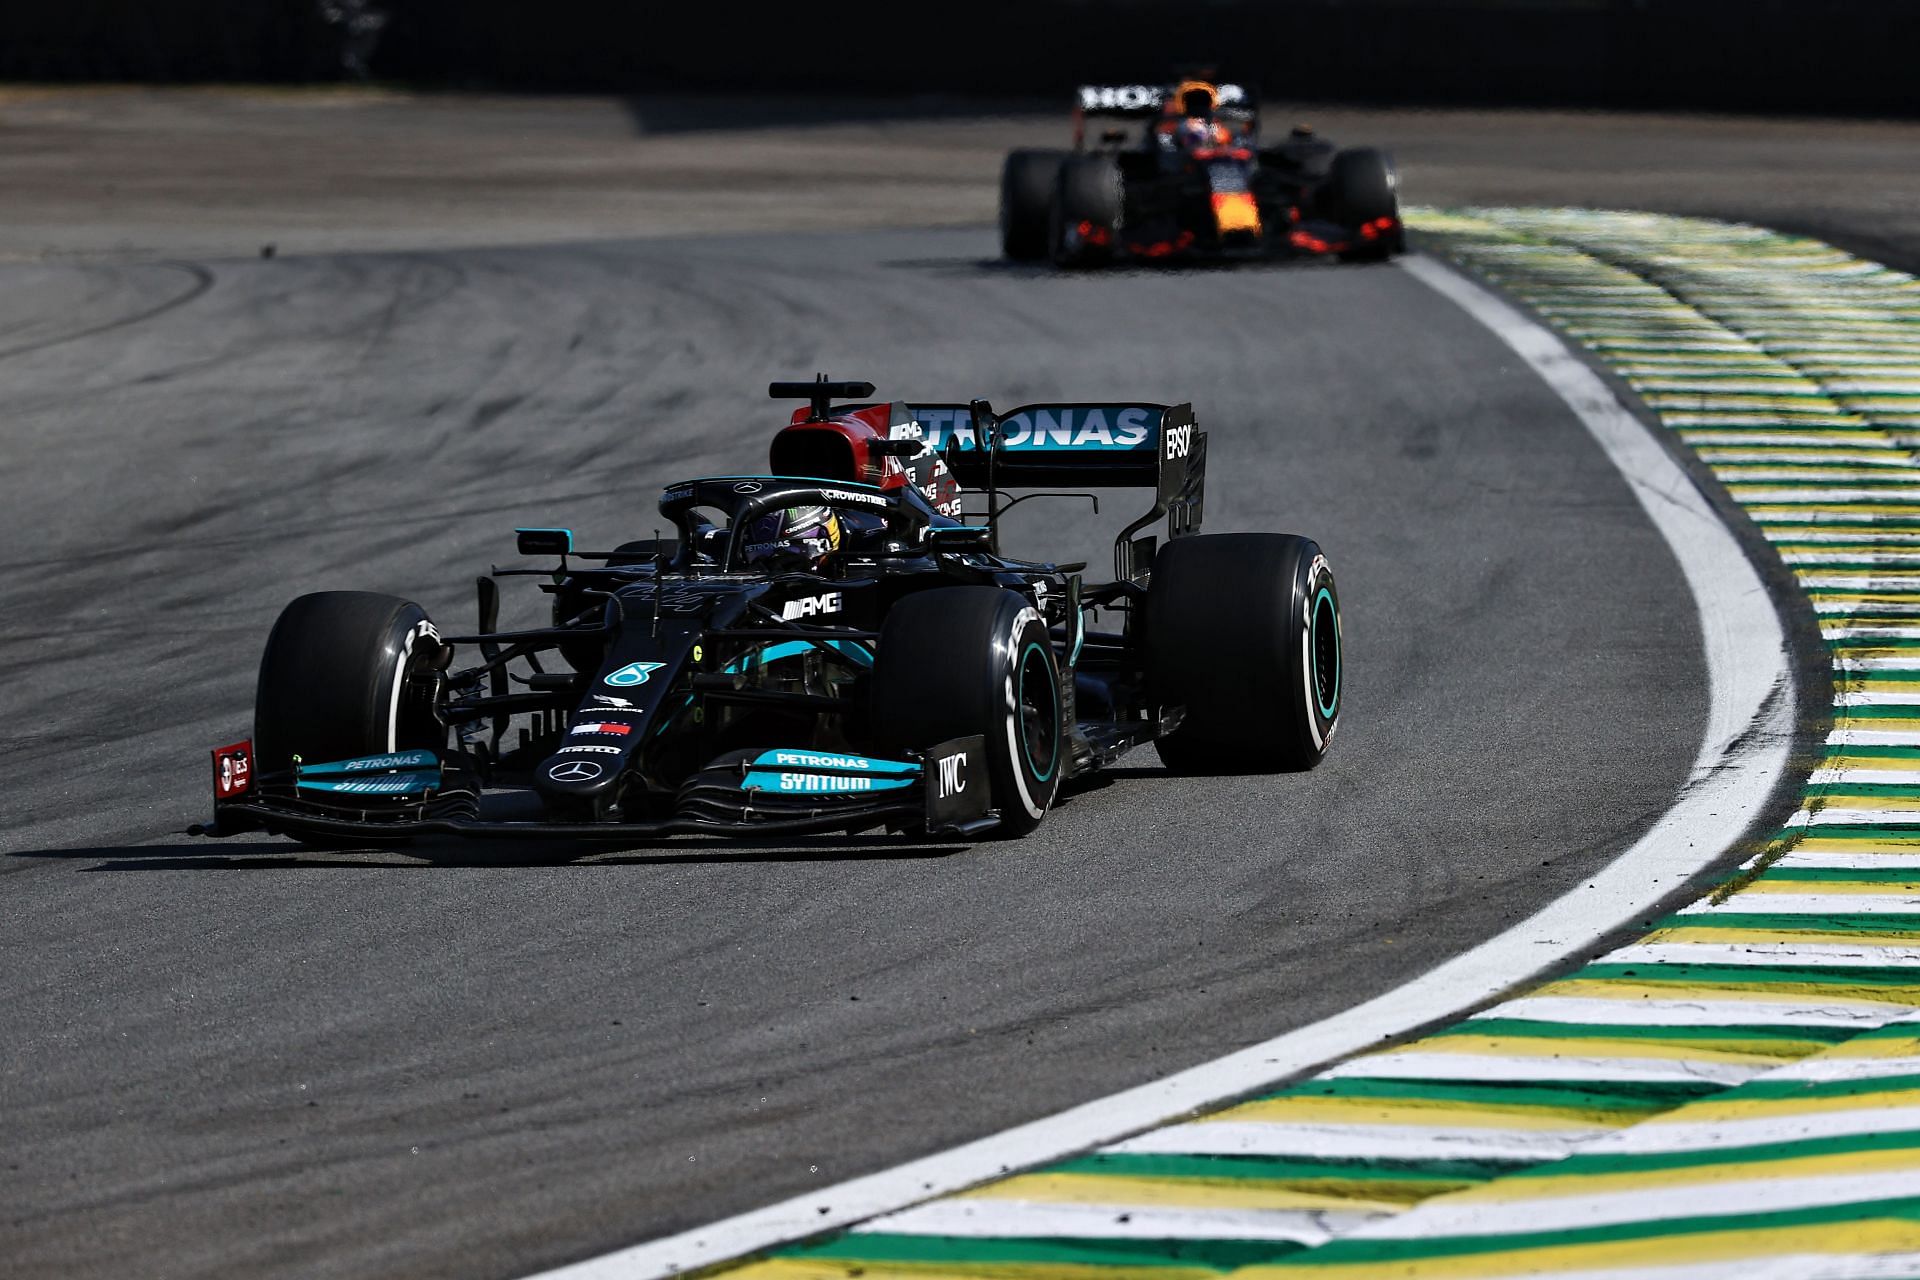 F1 Grand Prix of Brazil - Lewis Hamilton breezes past Max Verstappen